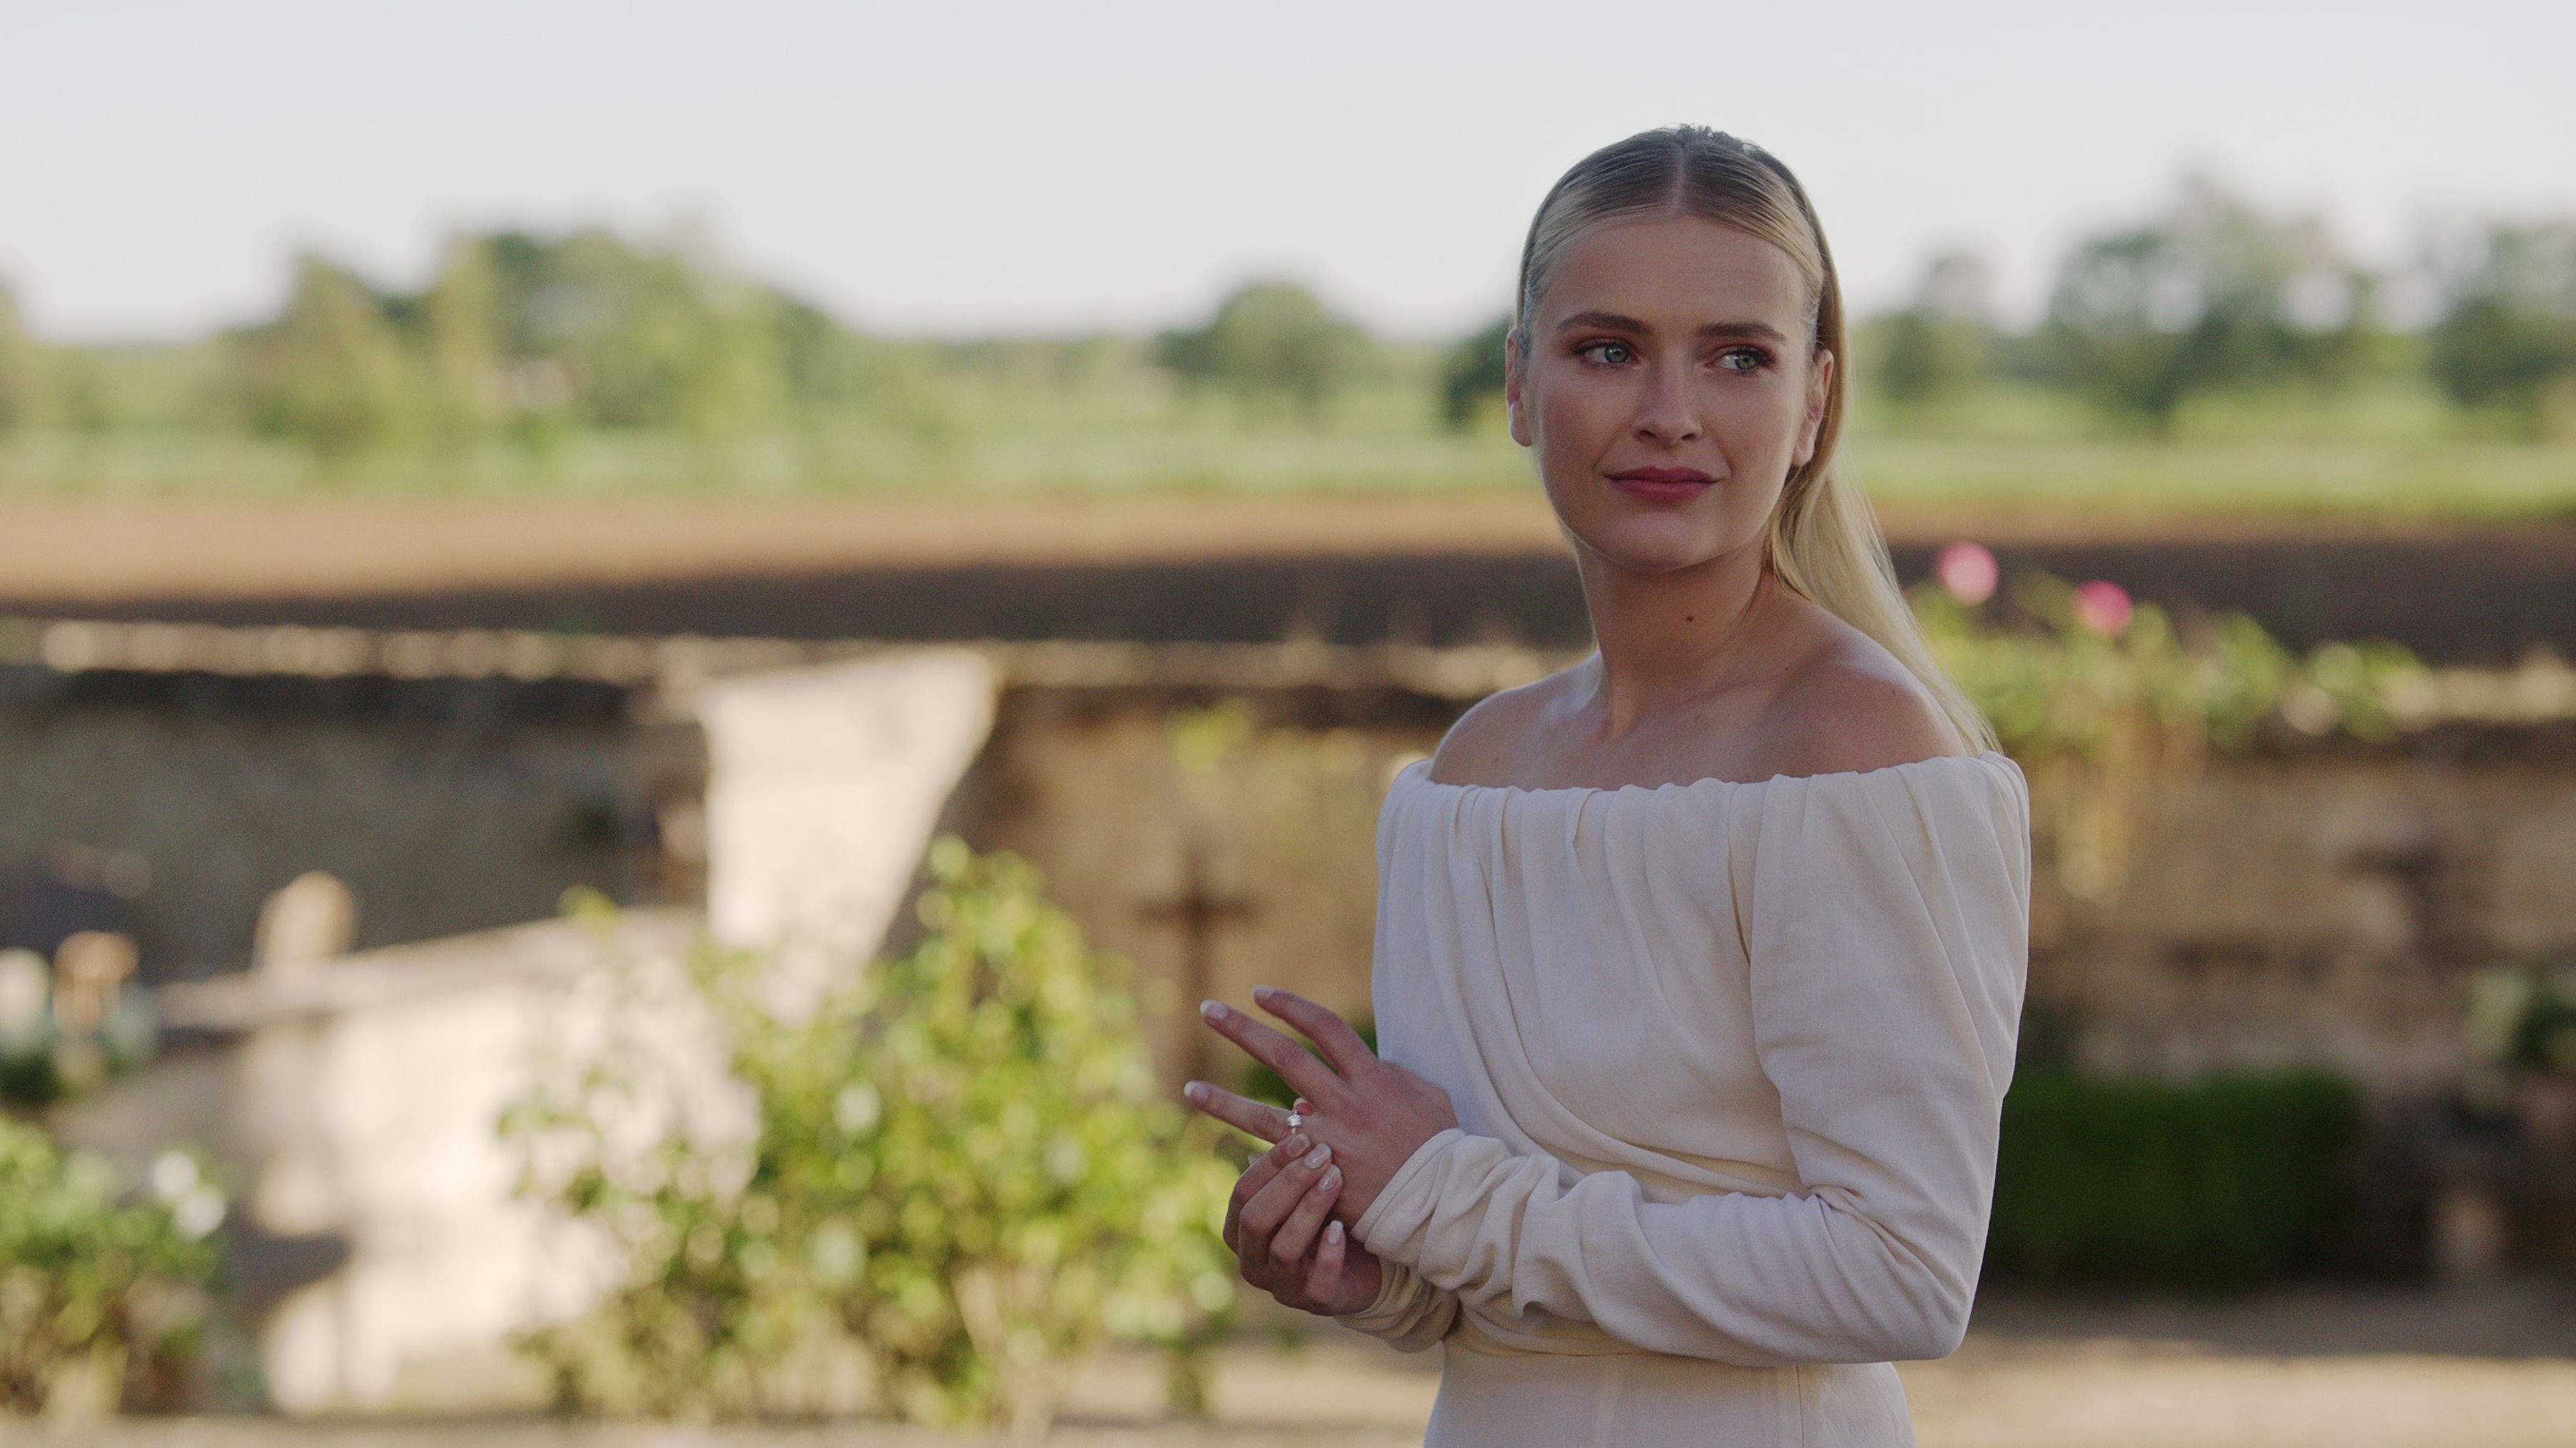 Emily In Paris' Season 4: Plot, Cast, News & More